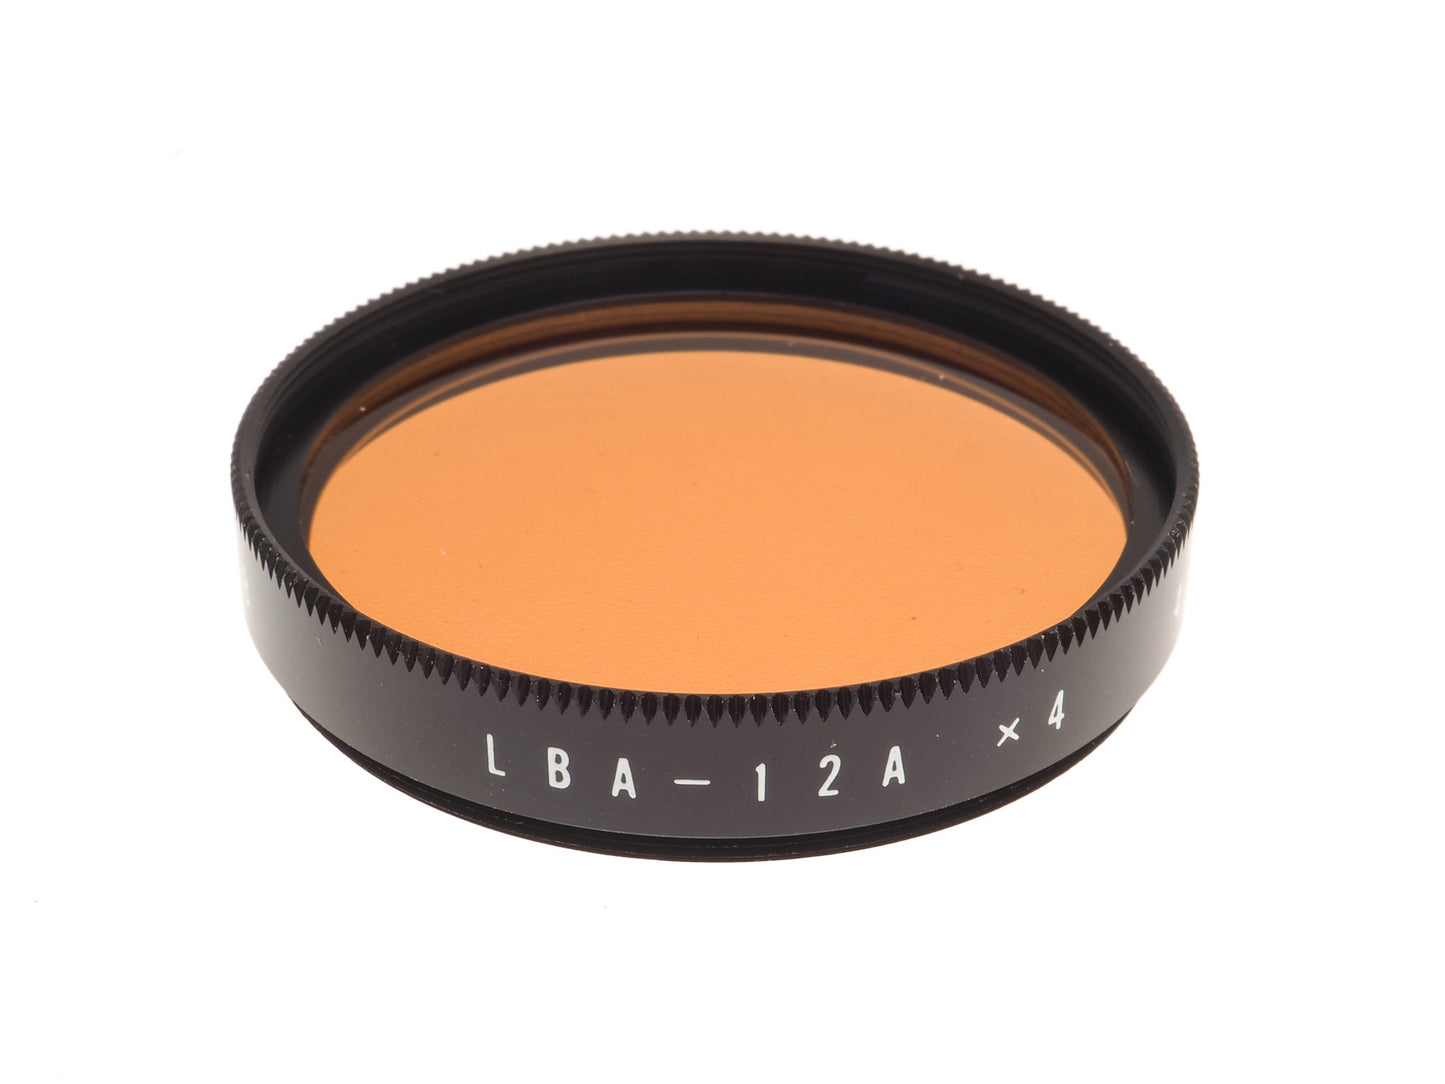 Fujica 40.5mm Color Correction Filter LBA-12A 4x - Accessory